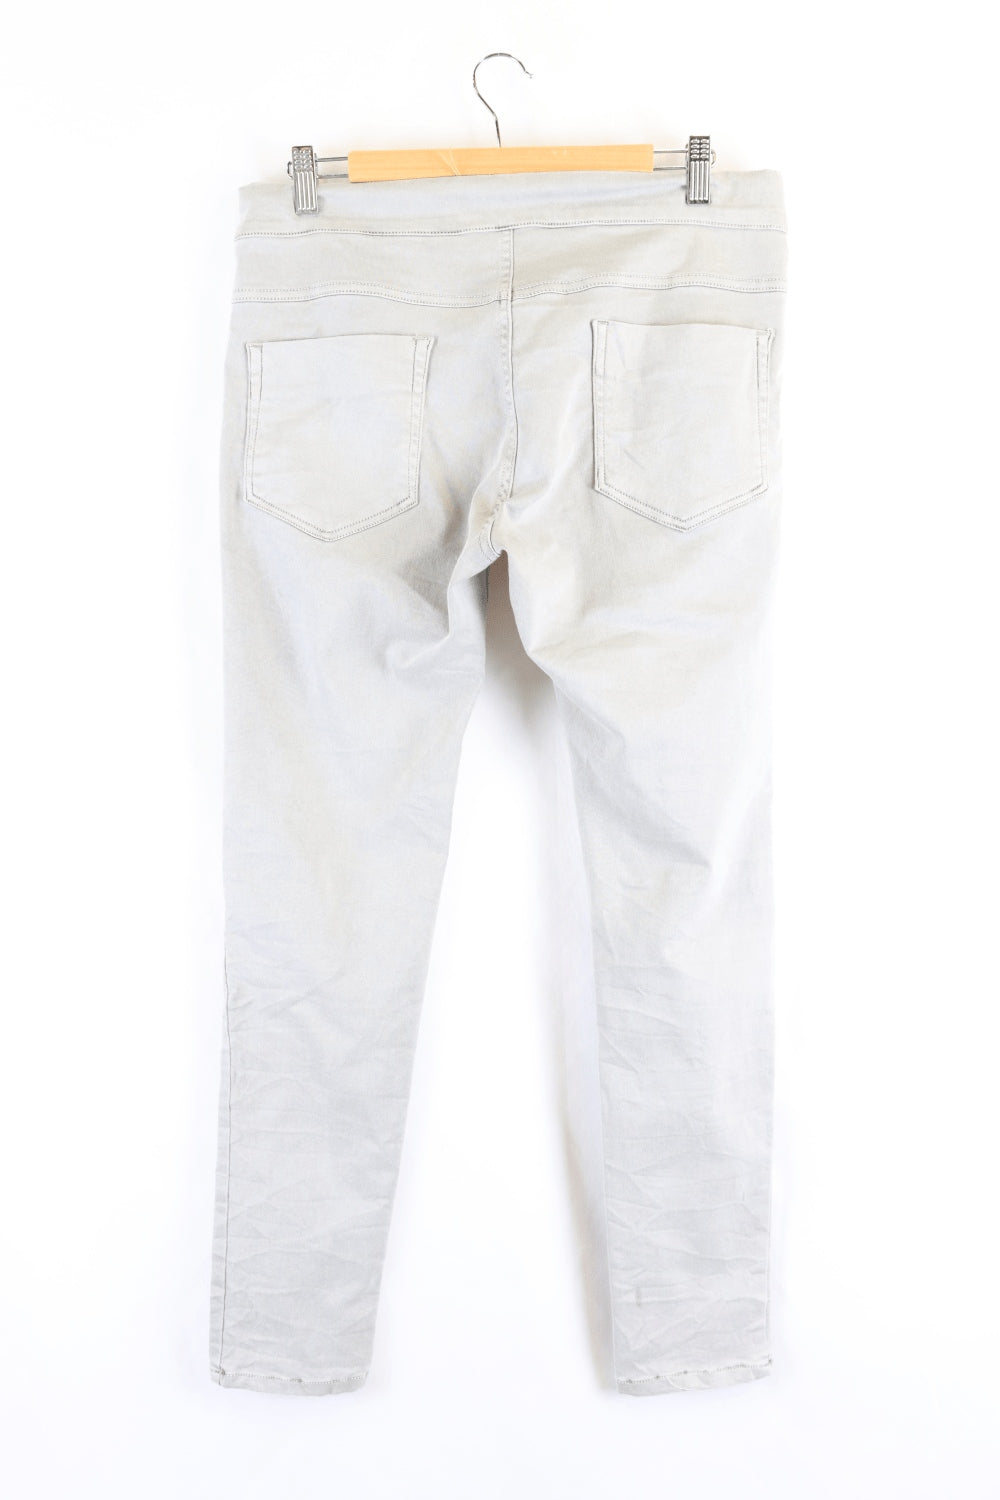 Ksoot Grey Pants 28 (AU 10)